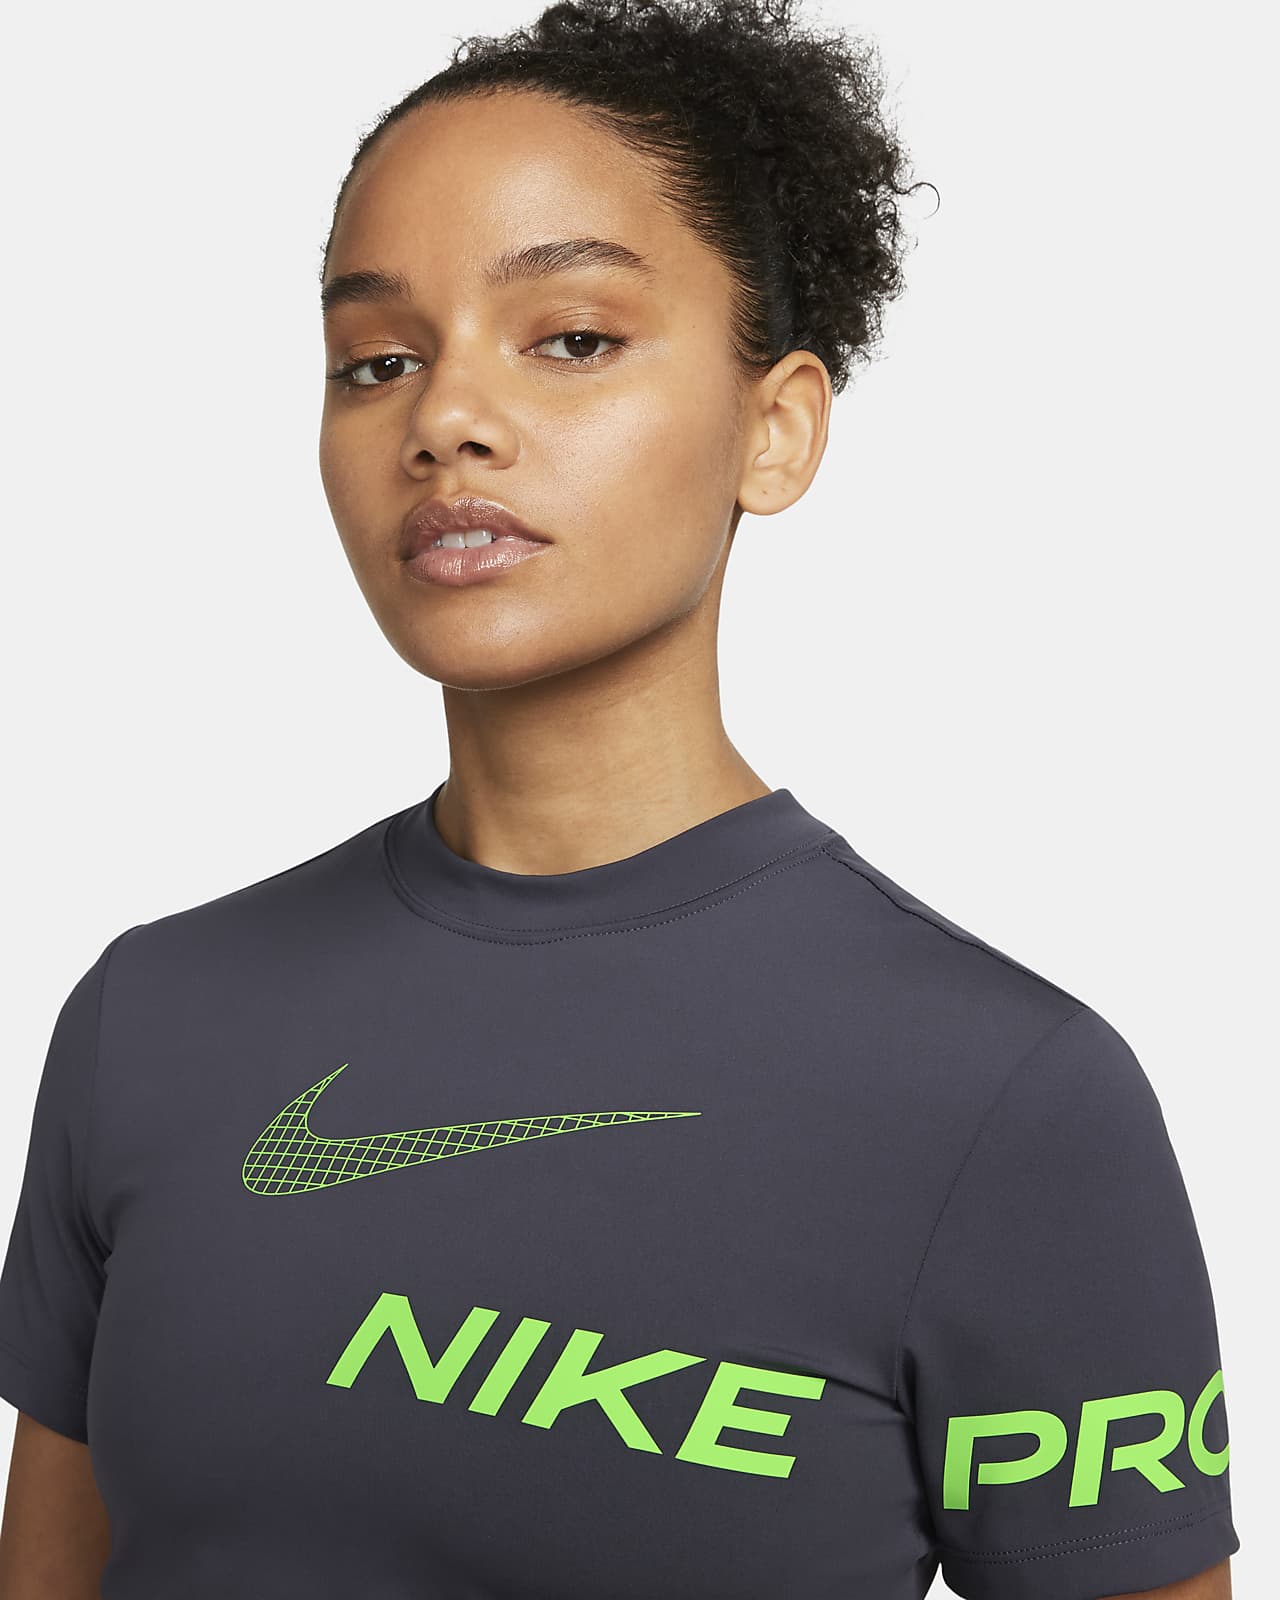 Pro Women's Short-Sleeve Cropped Graphic Training Top. Nike LU